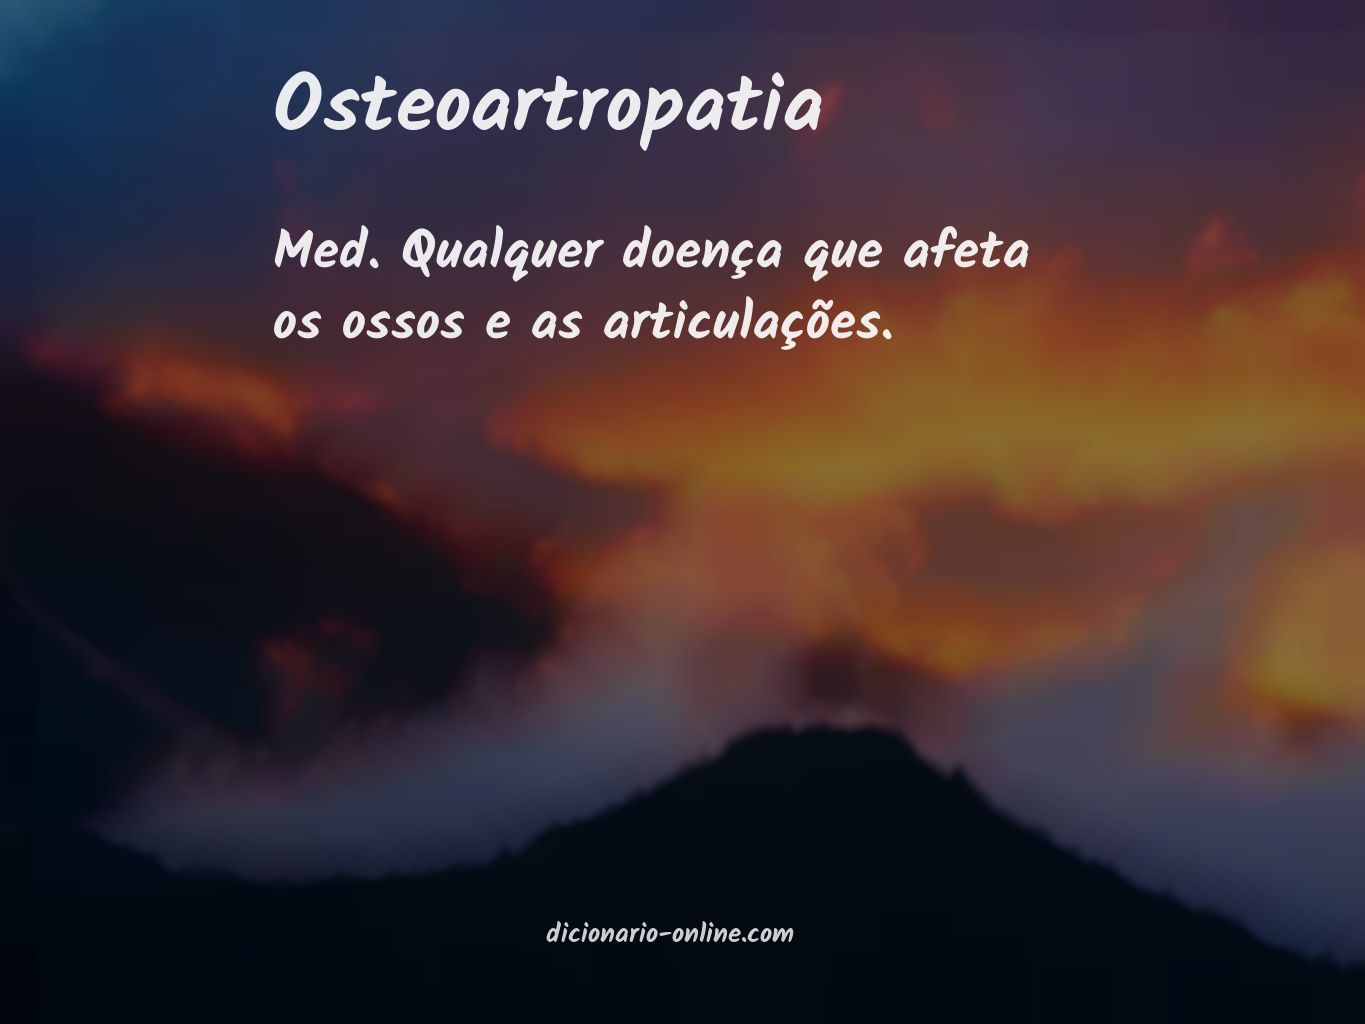 Significado de osteoartropatia